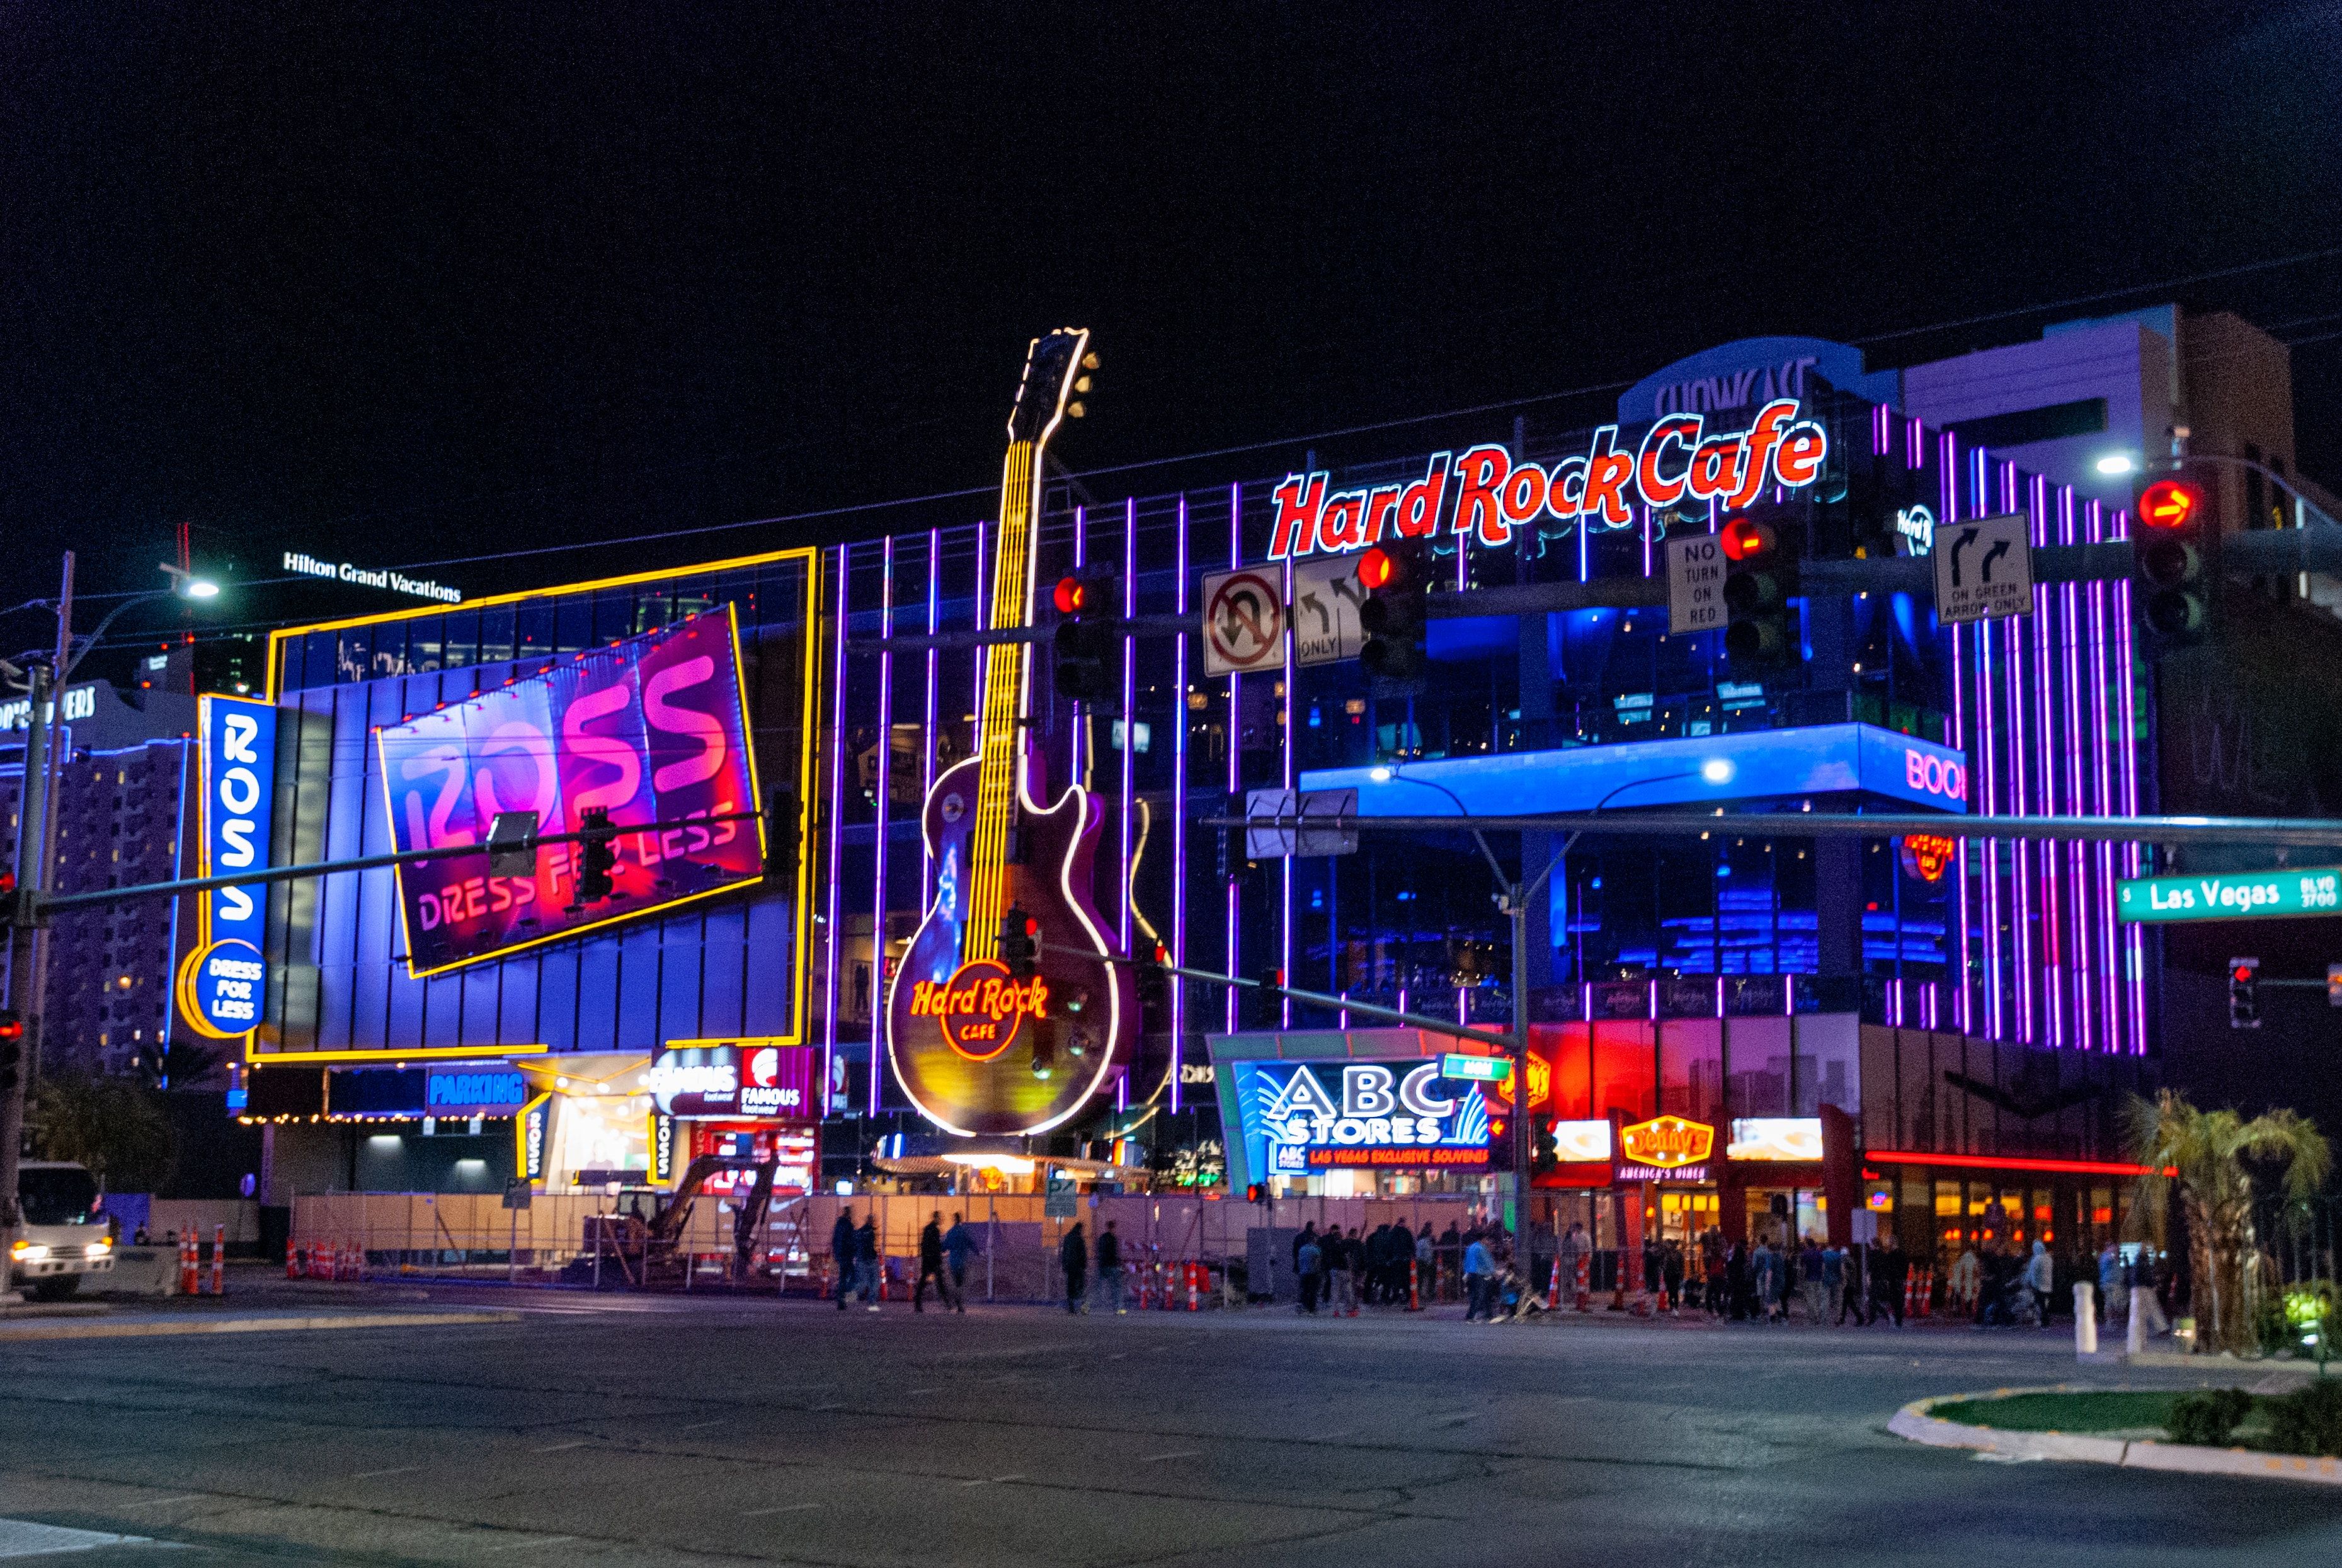 The Hard Rock Hotel Las Vegas - A music lover's dream